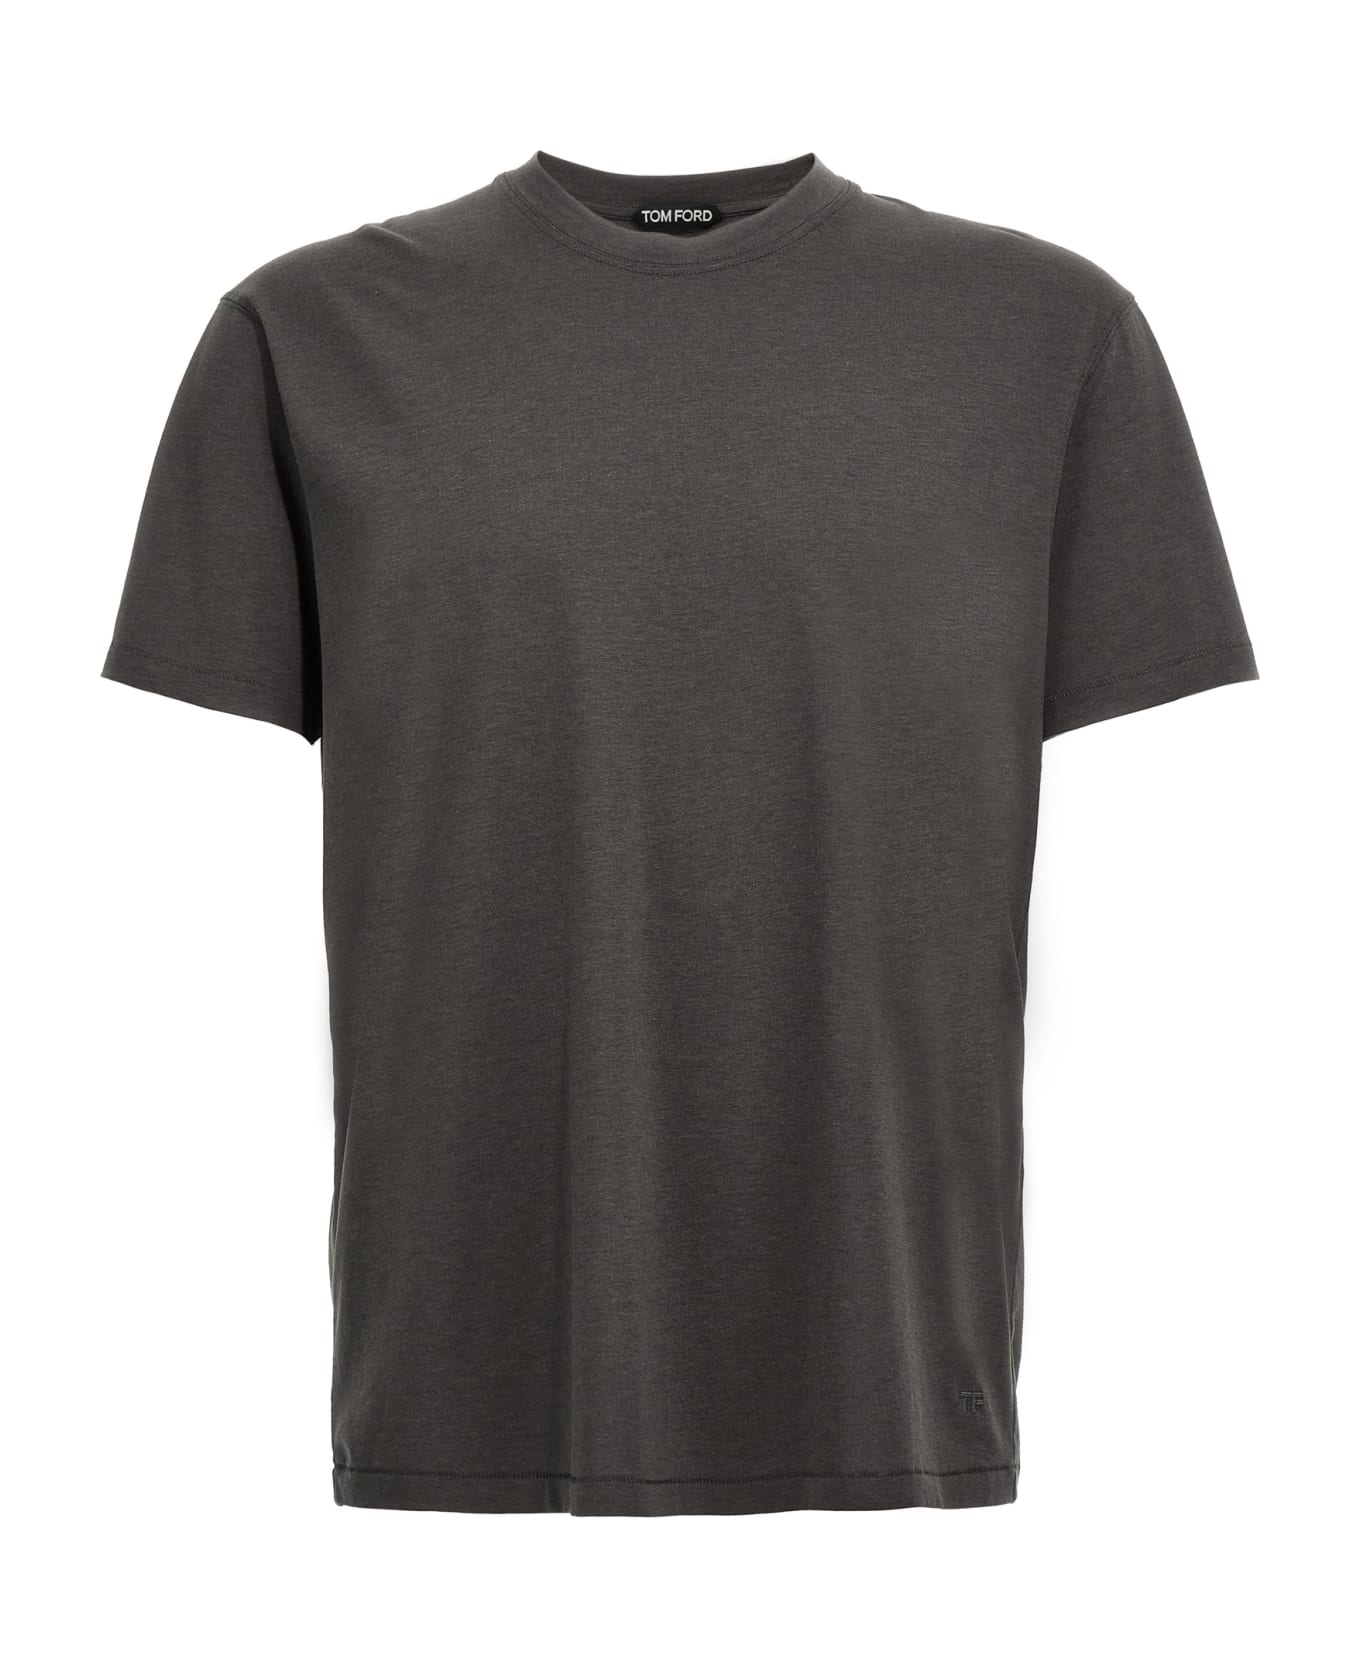 Tom Ford Basic T-shirt - Gray